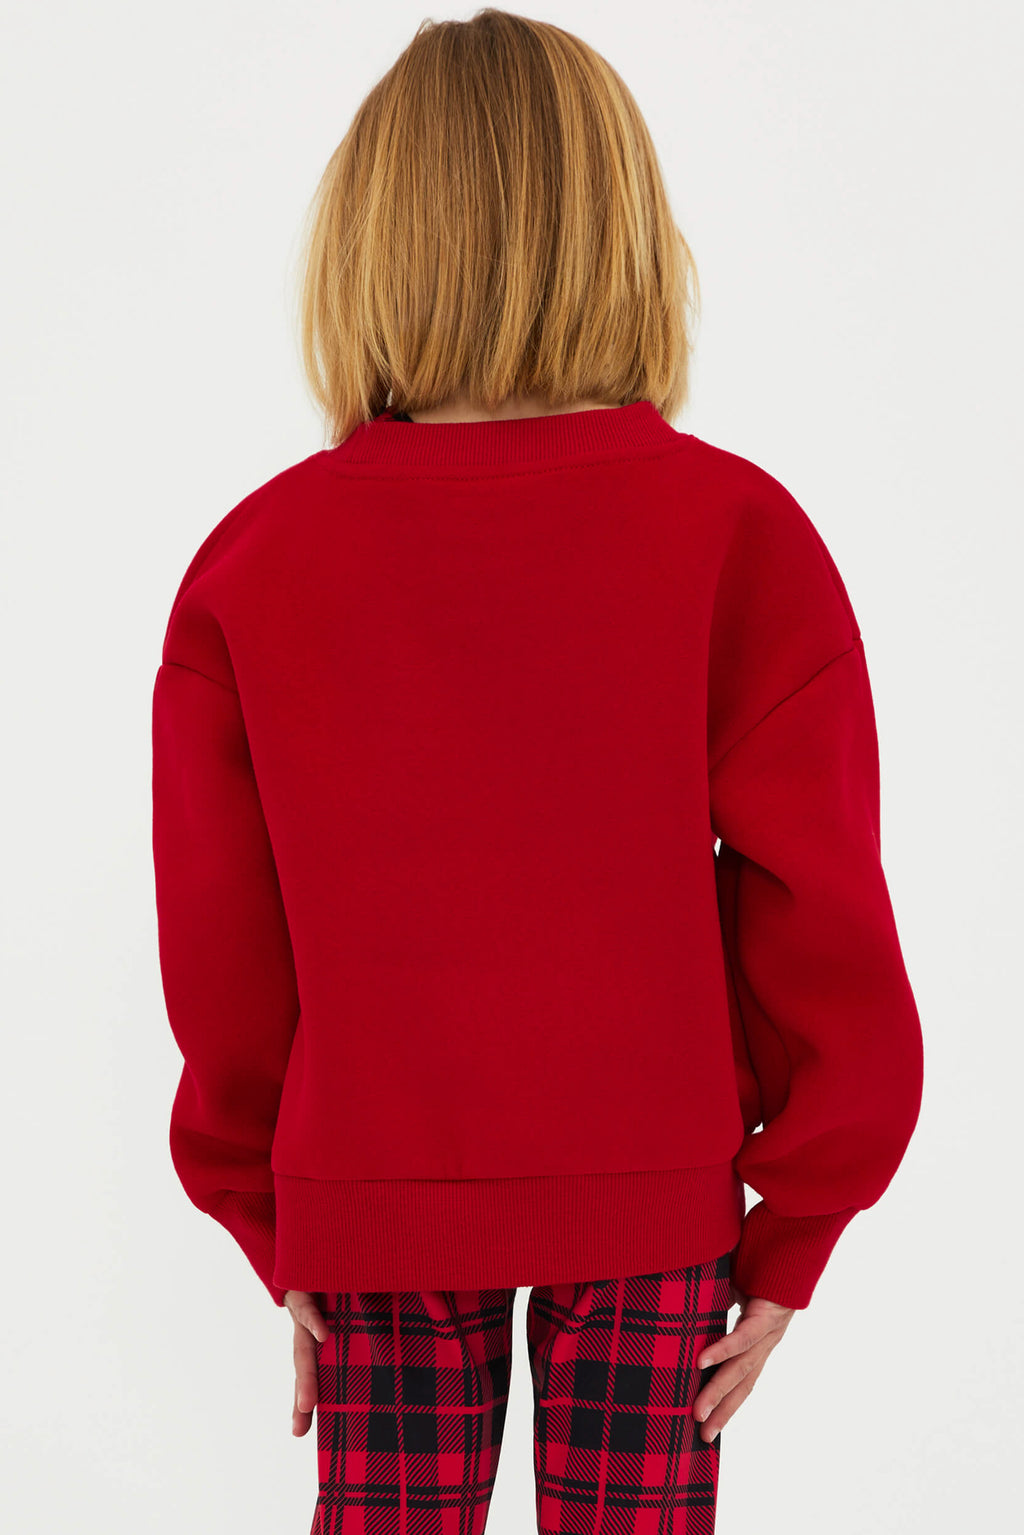 Little Dawn Sweatshirt Merry Red